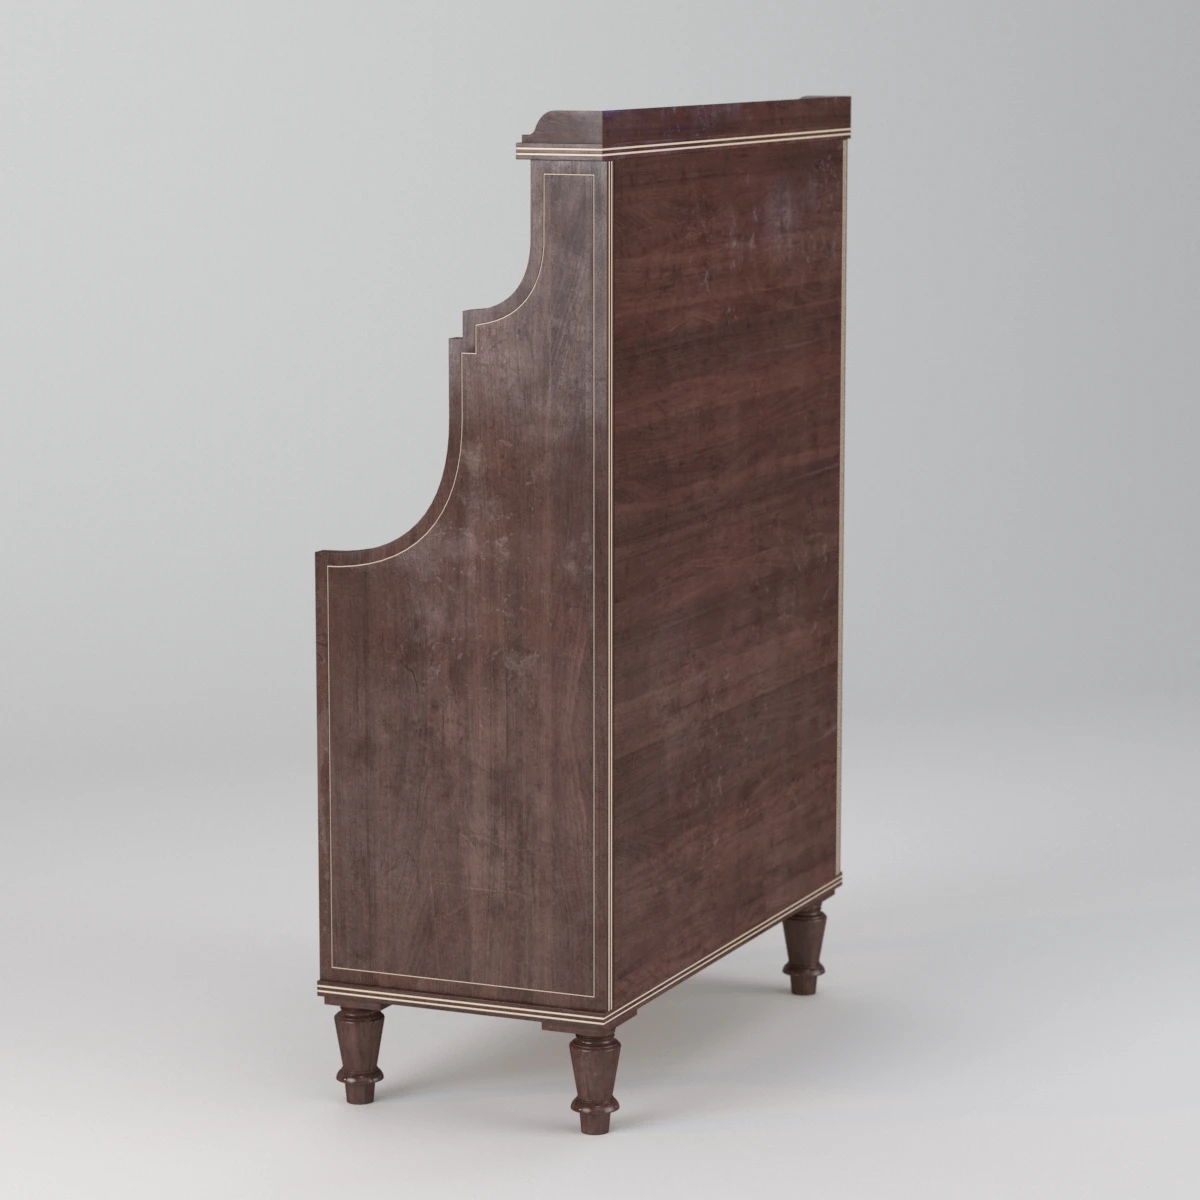 1820s English Regency Period Waterfall Bookcase 3D Model_04